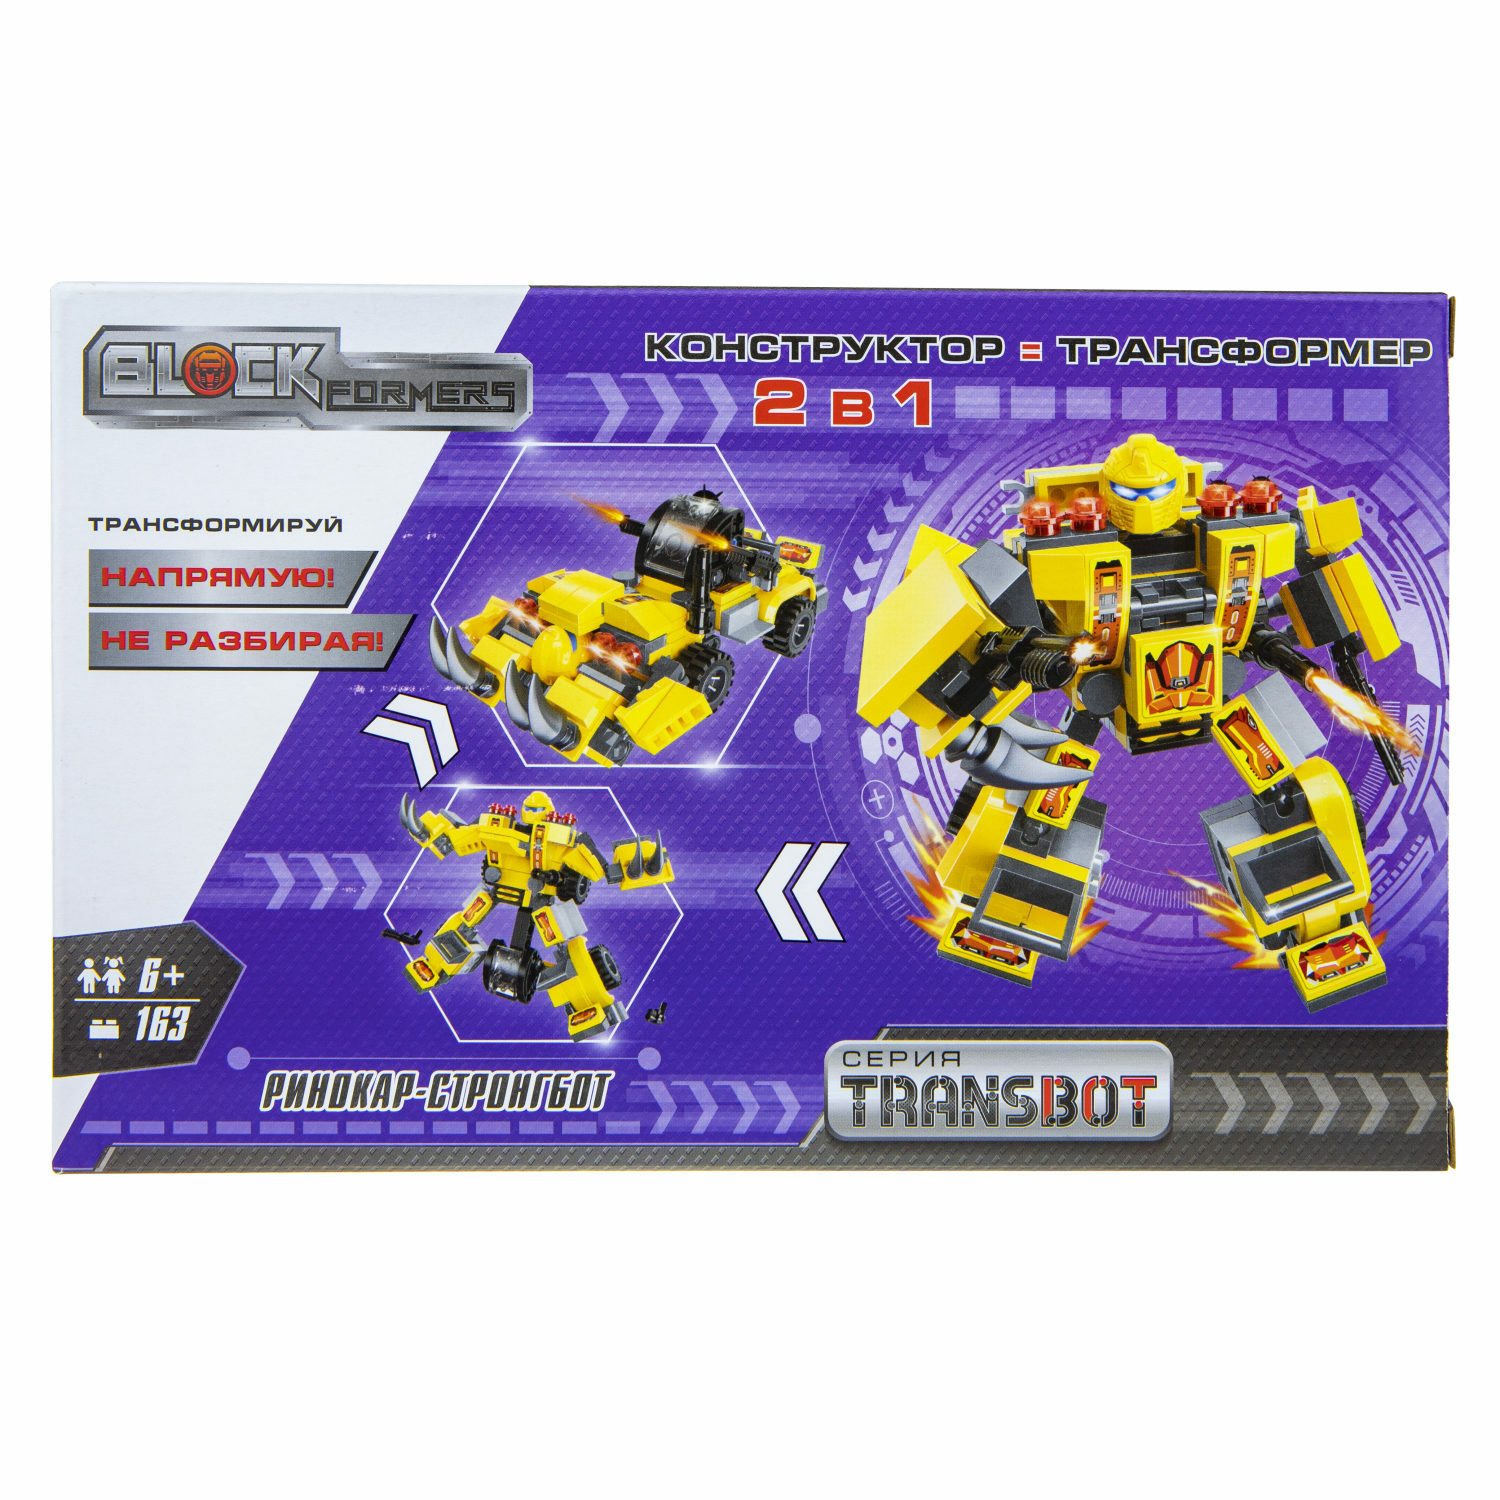 Конструктор Blockformers Transbot - Ринокар-Стронгбот  